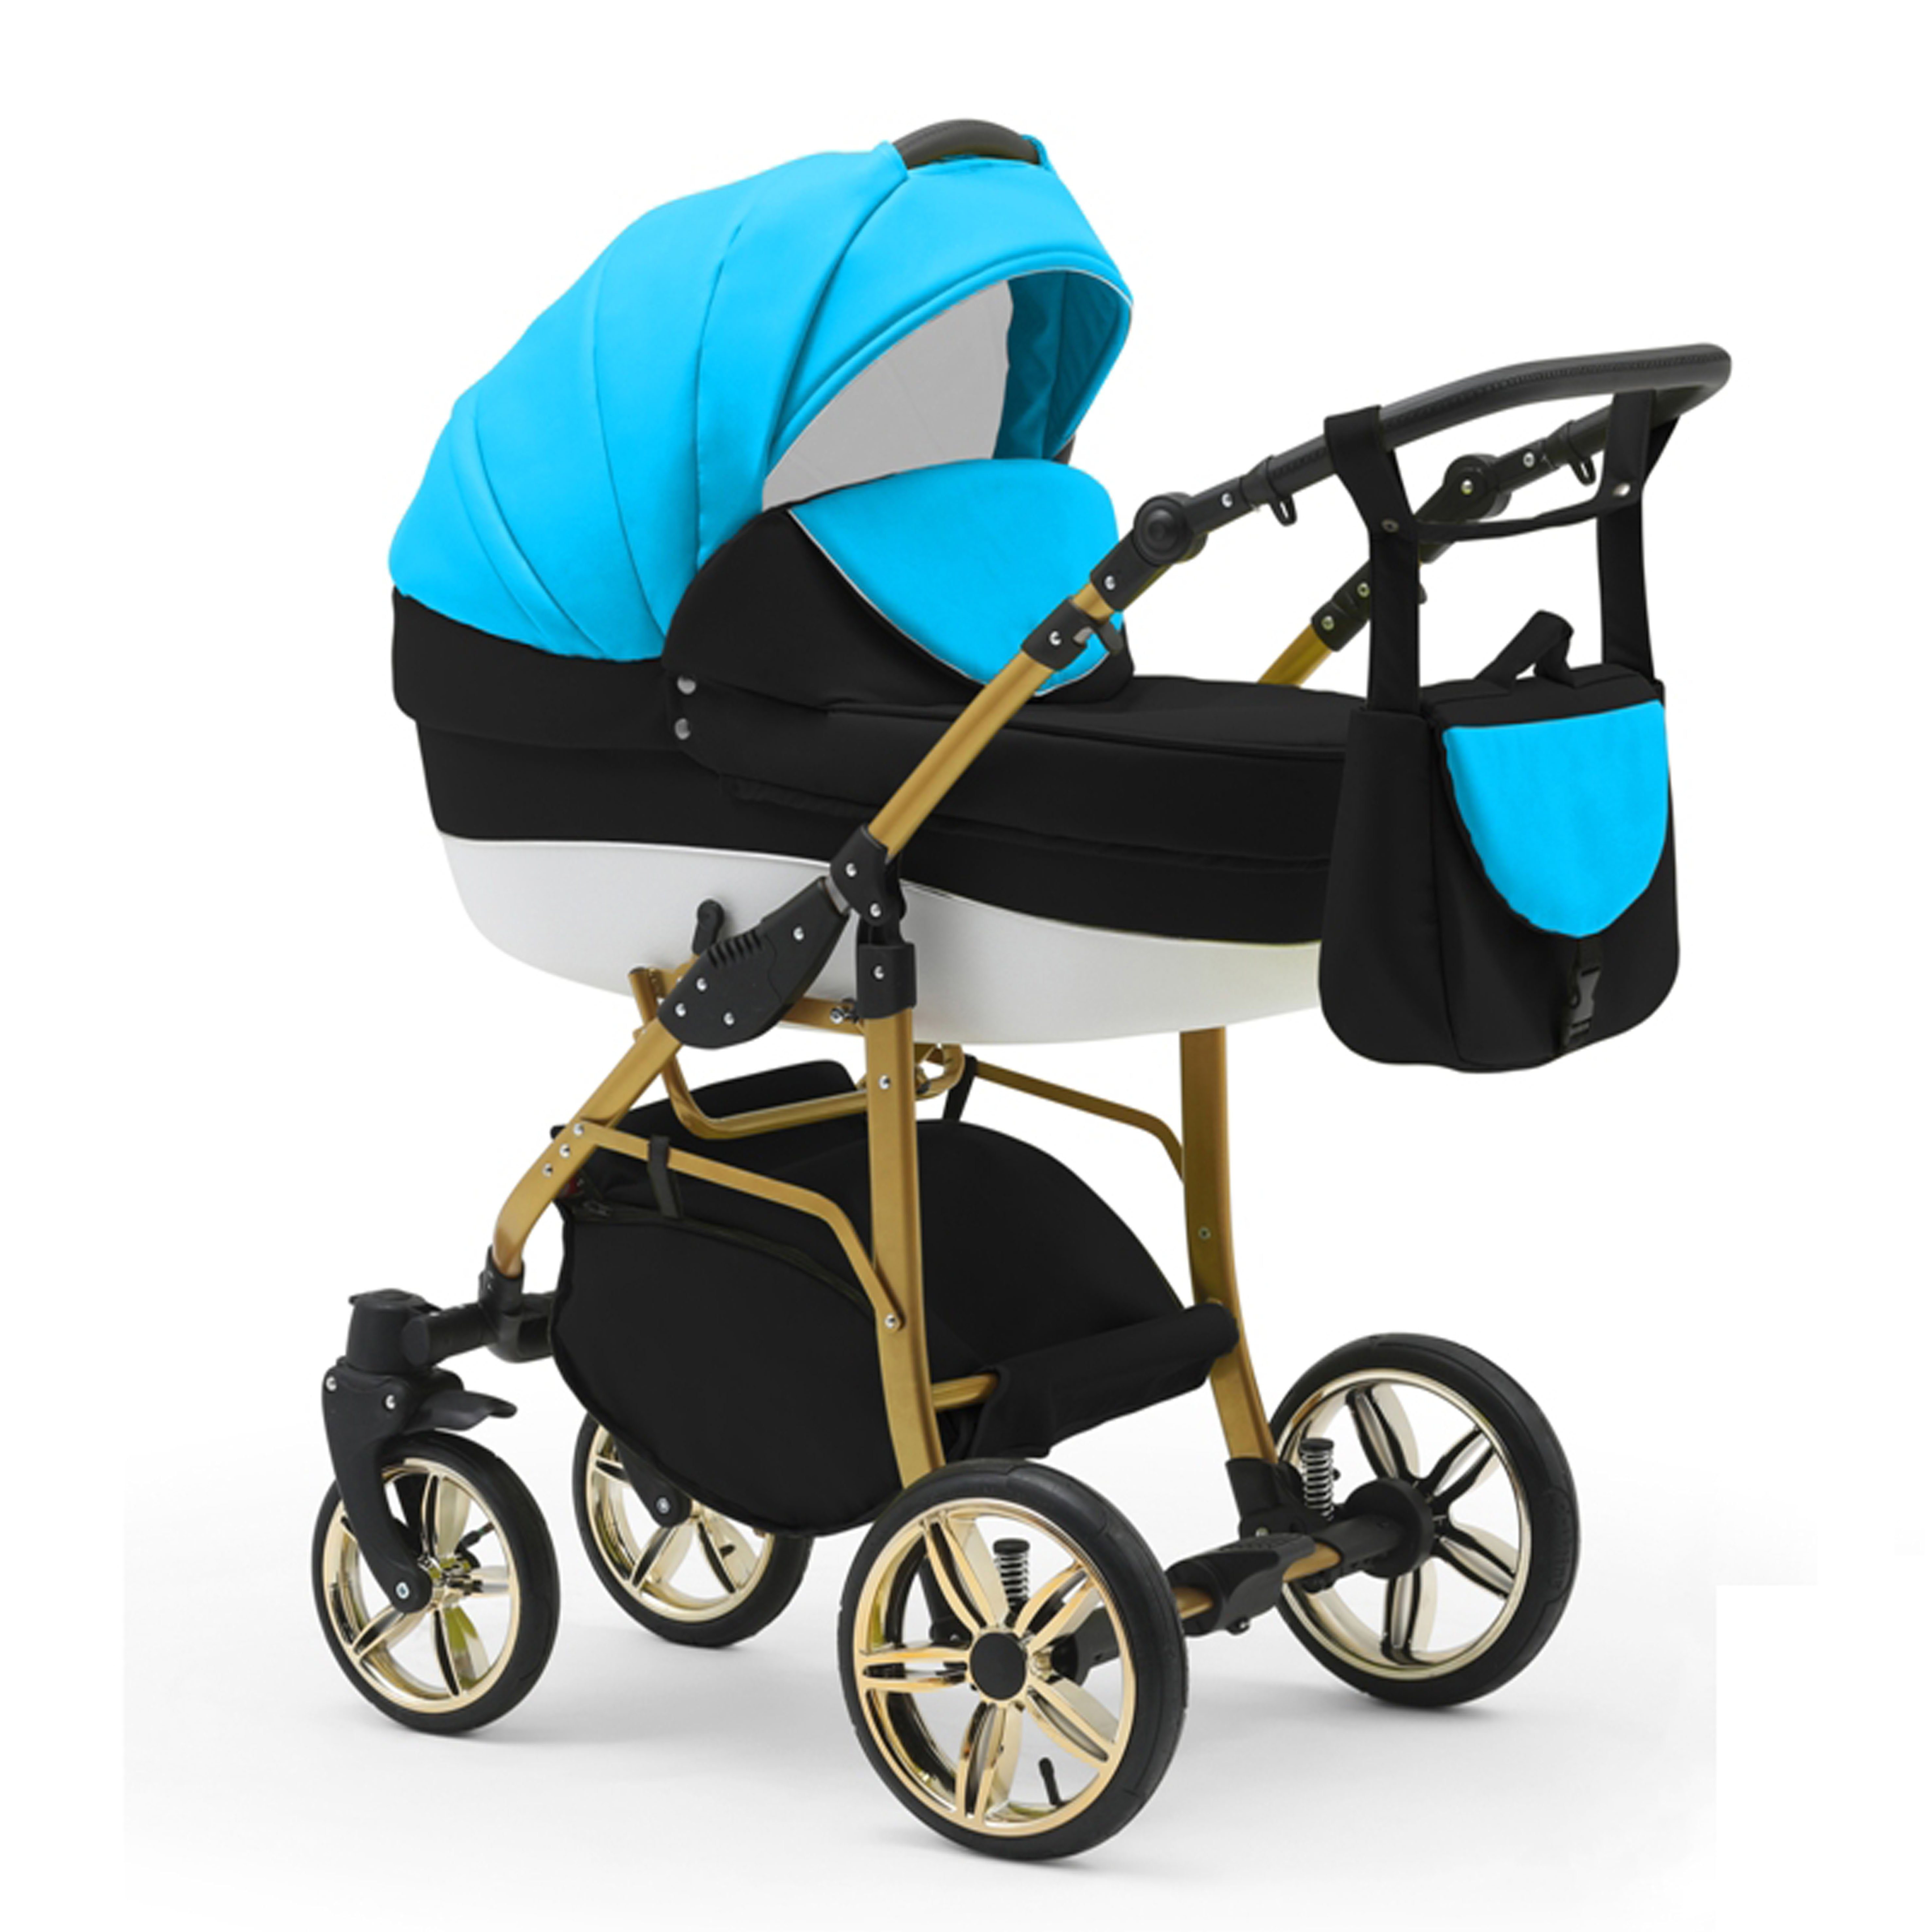 babies-on-wheels Kombi-Kinderwagen 2 in 1 Kinderwagen-Set Cosmo Gold - 13 Teile - in 46 Farben Türkis-Schwarz-Weiß